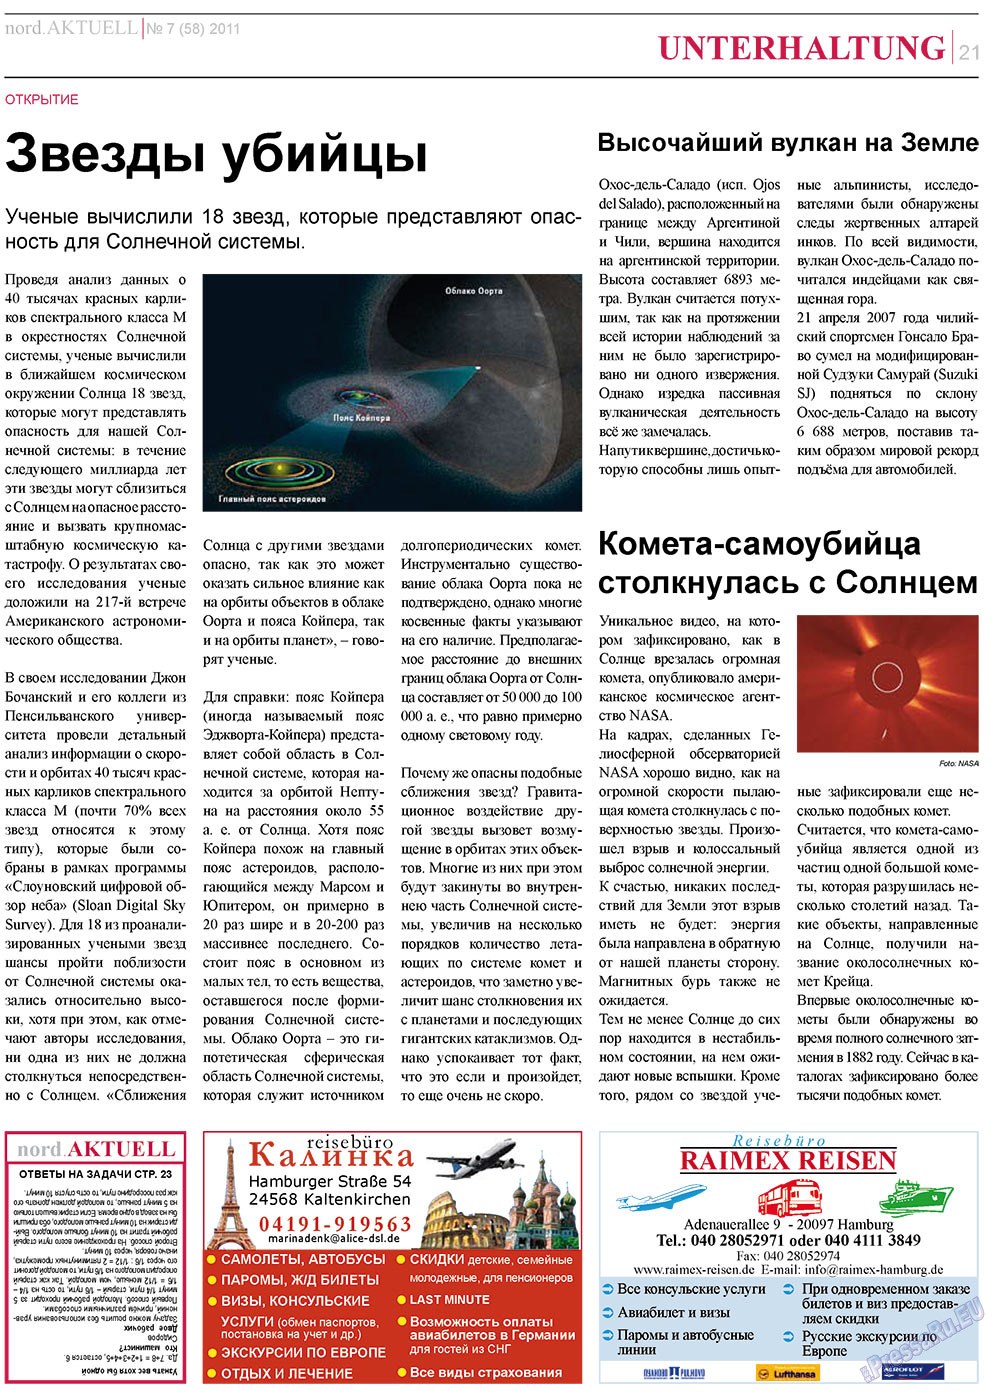 nord.Aktuell, газета. 2011 №7 стр.21